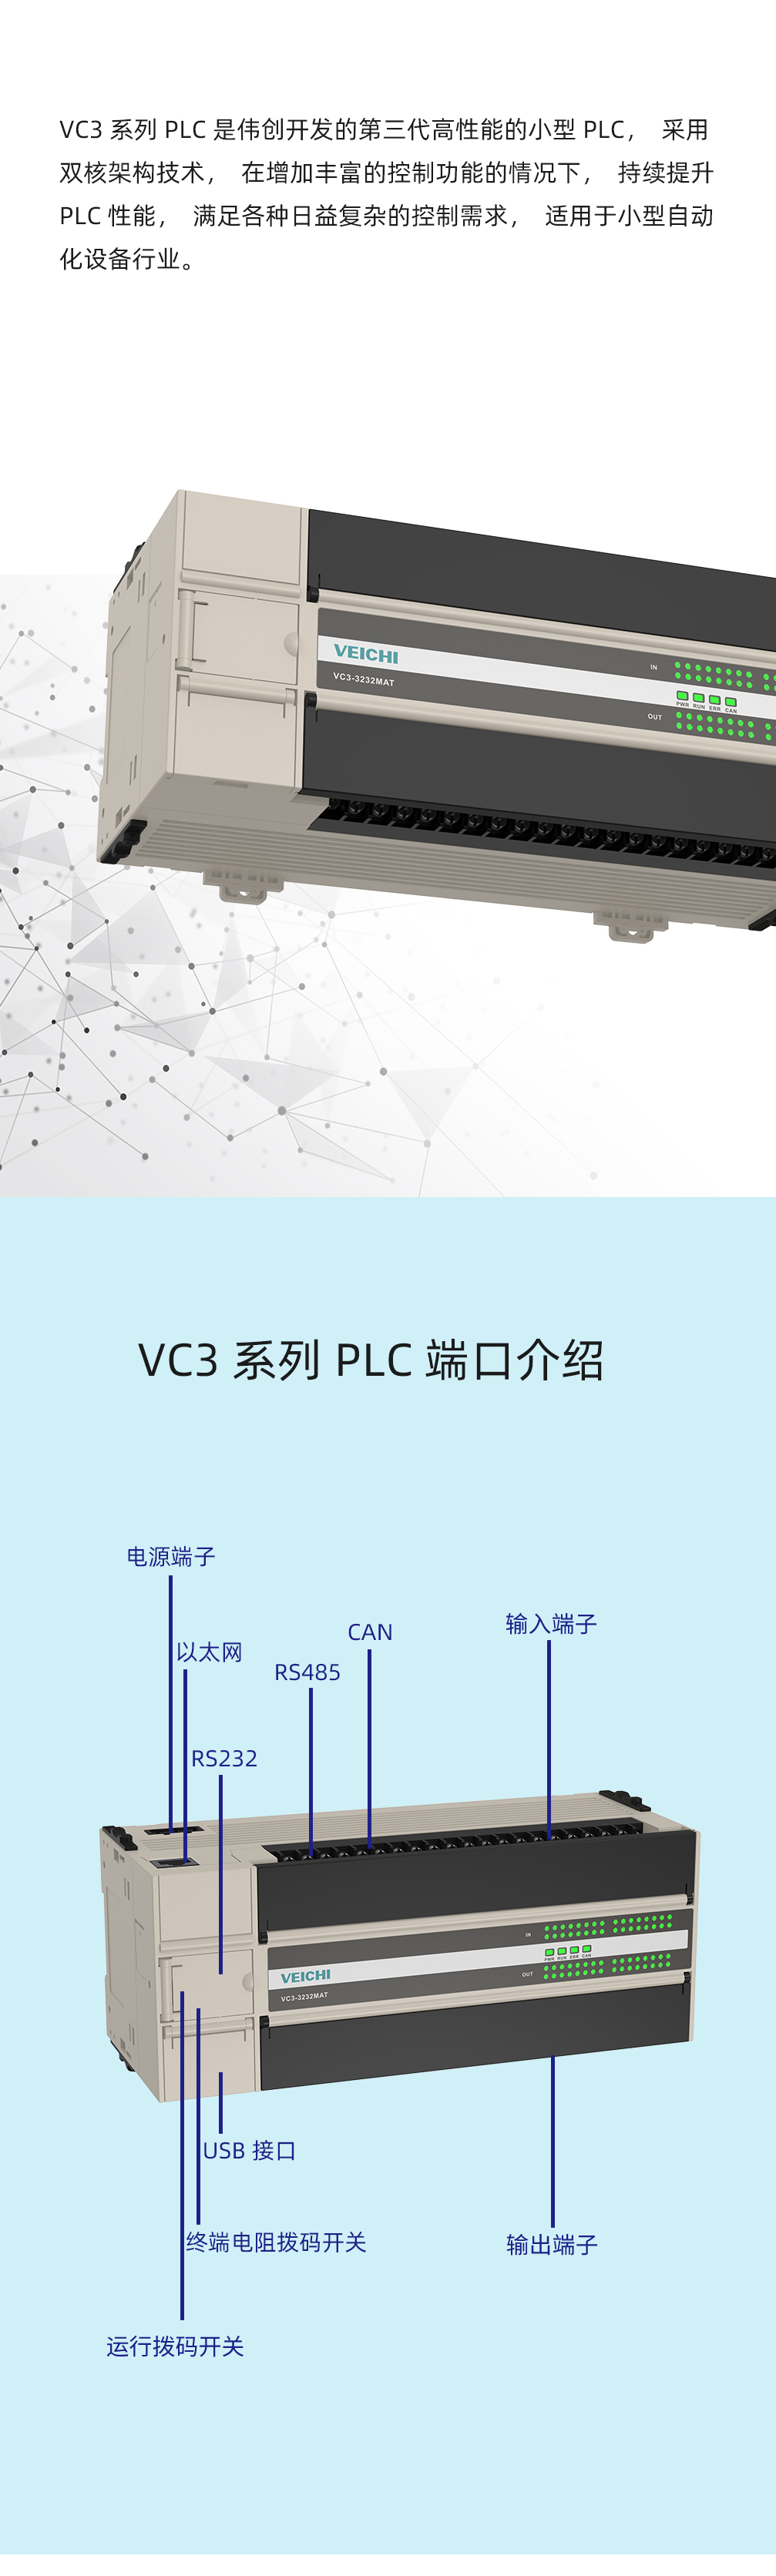 VC3长图-2.jpg